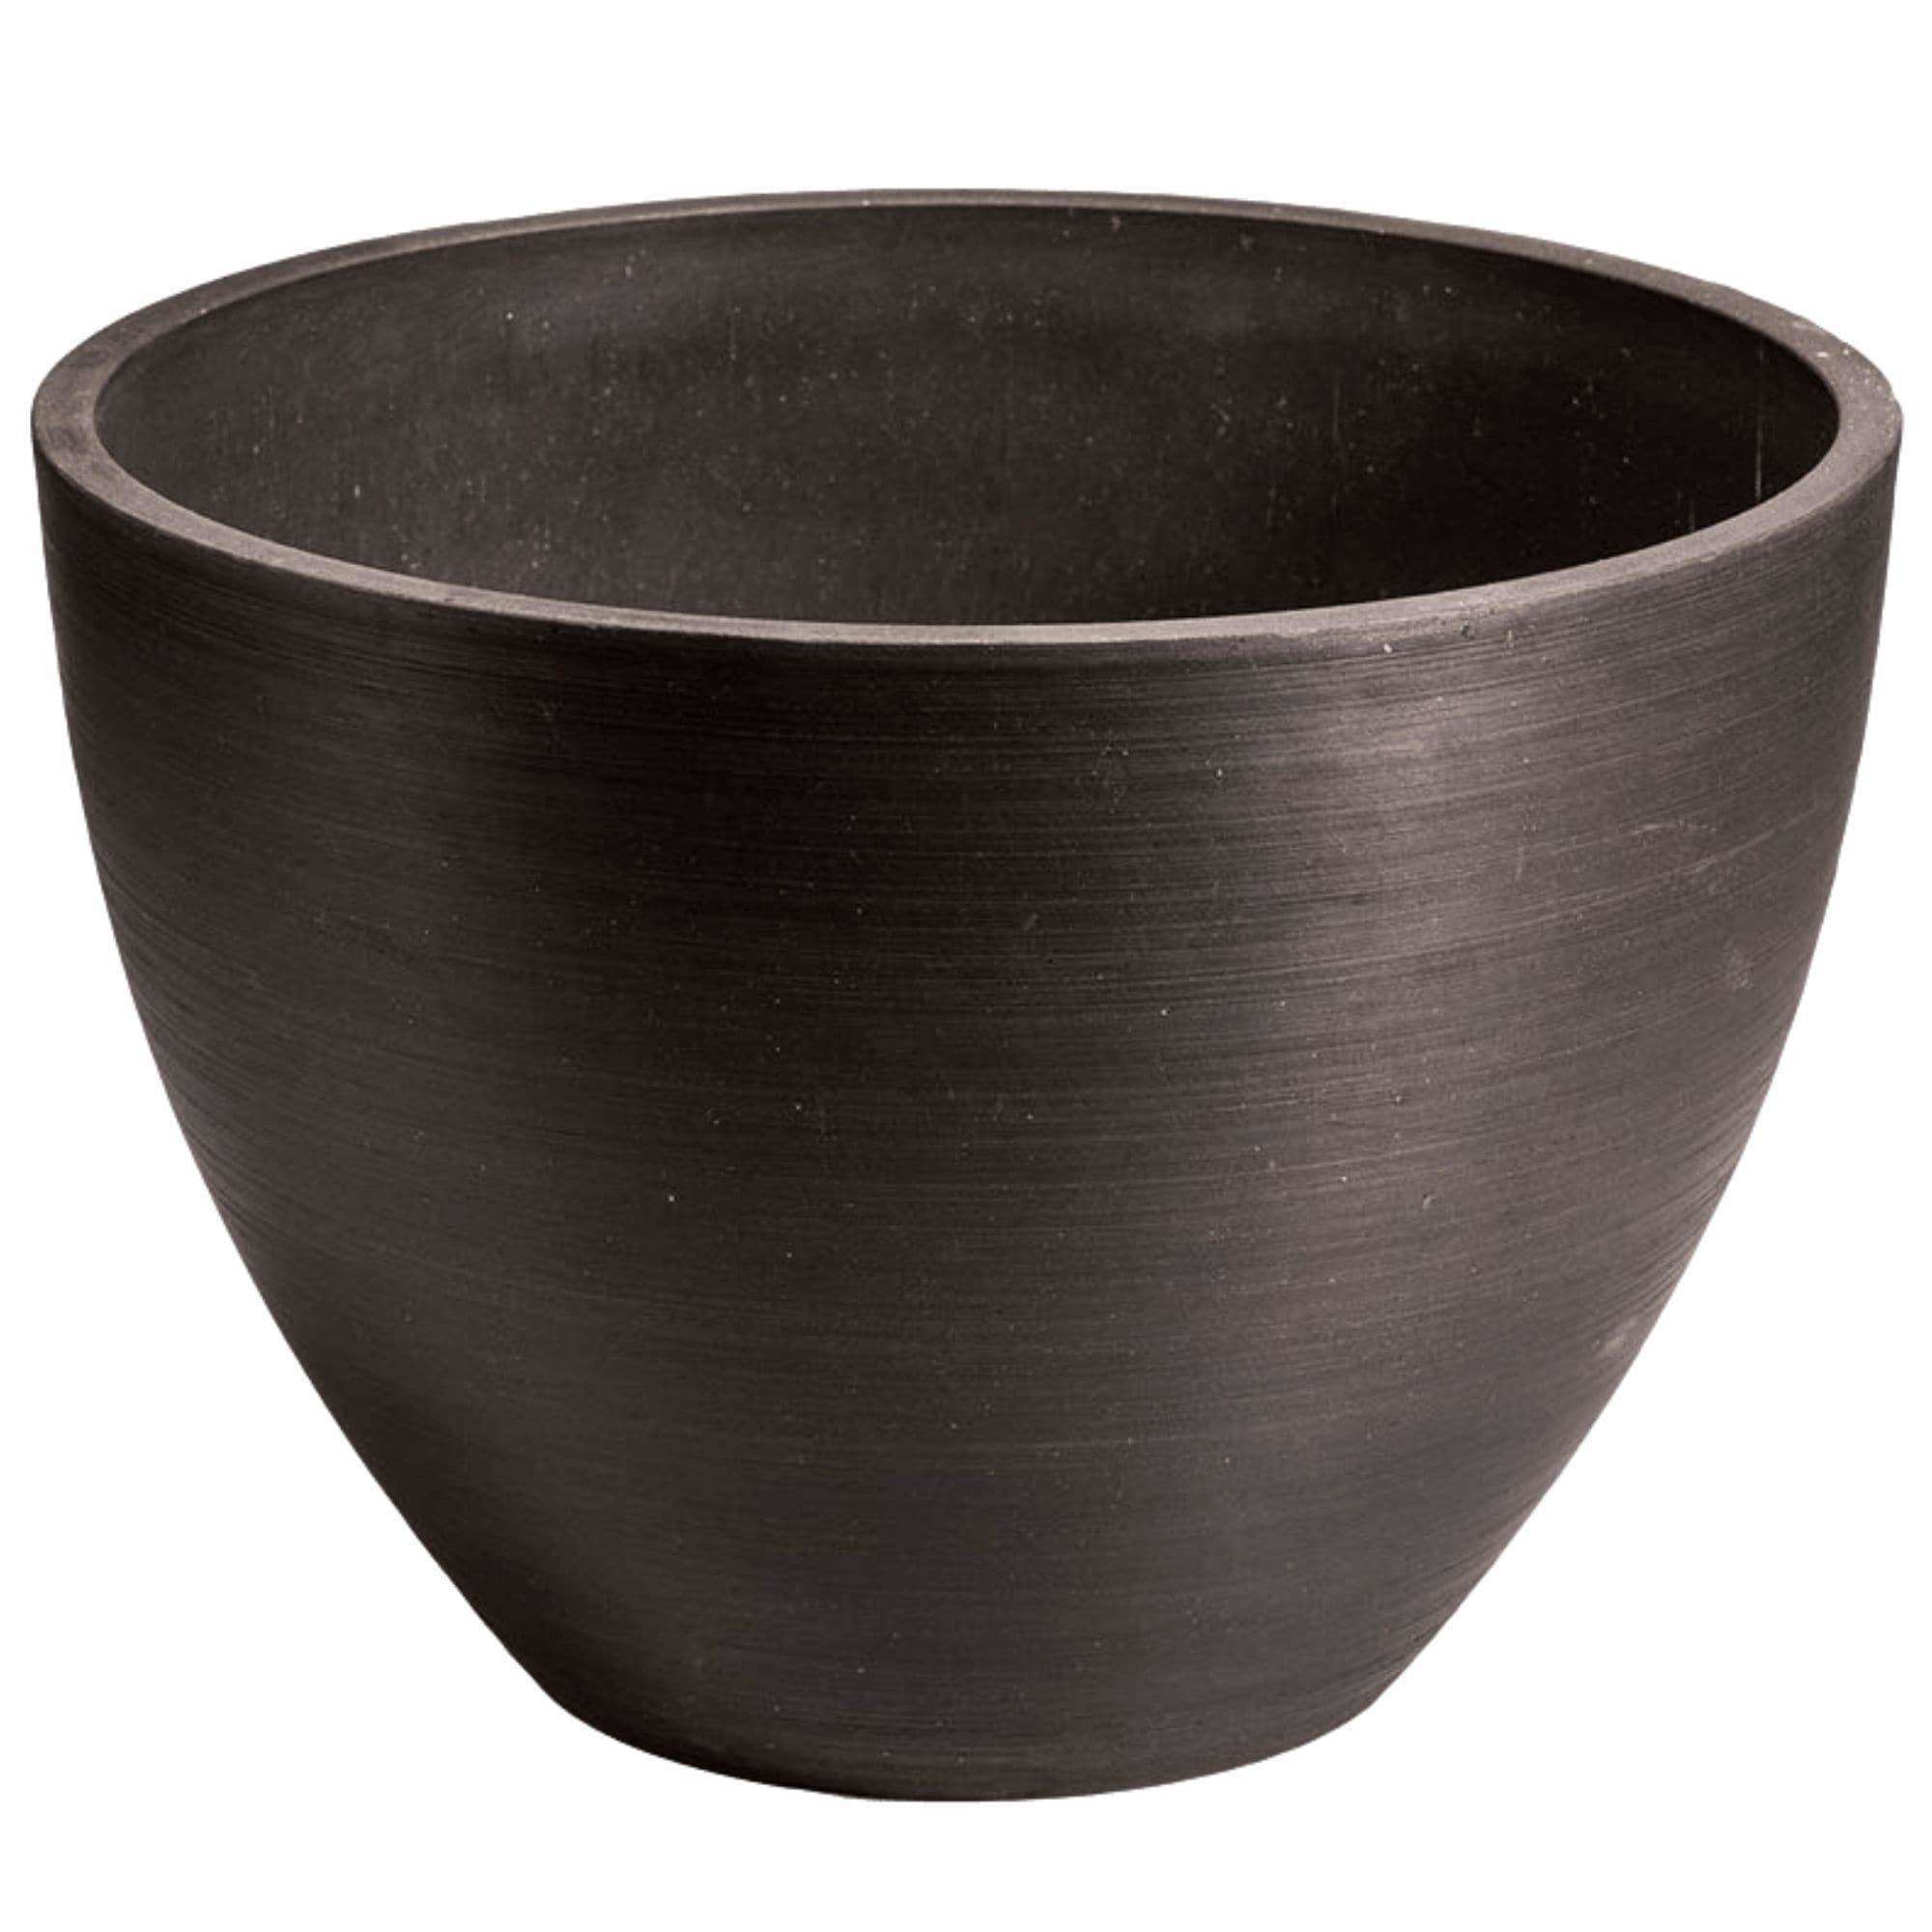 polished-black-planter-bowl-30cm-424794.jpg